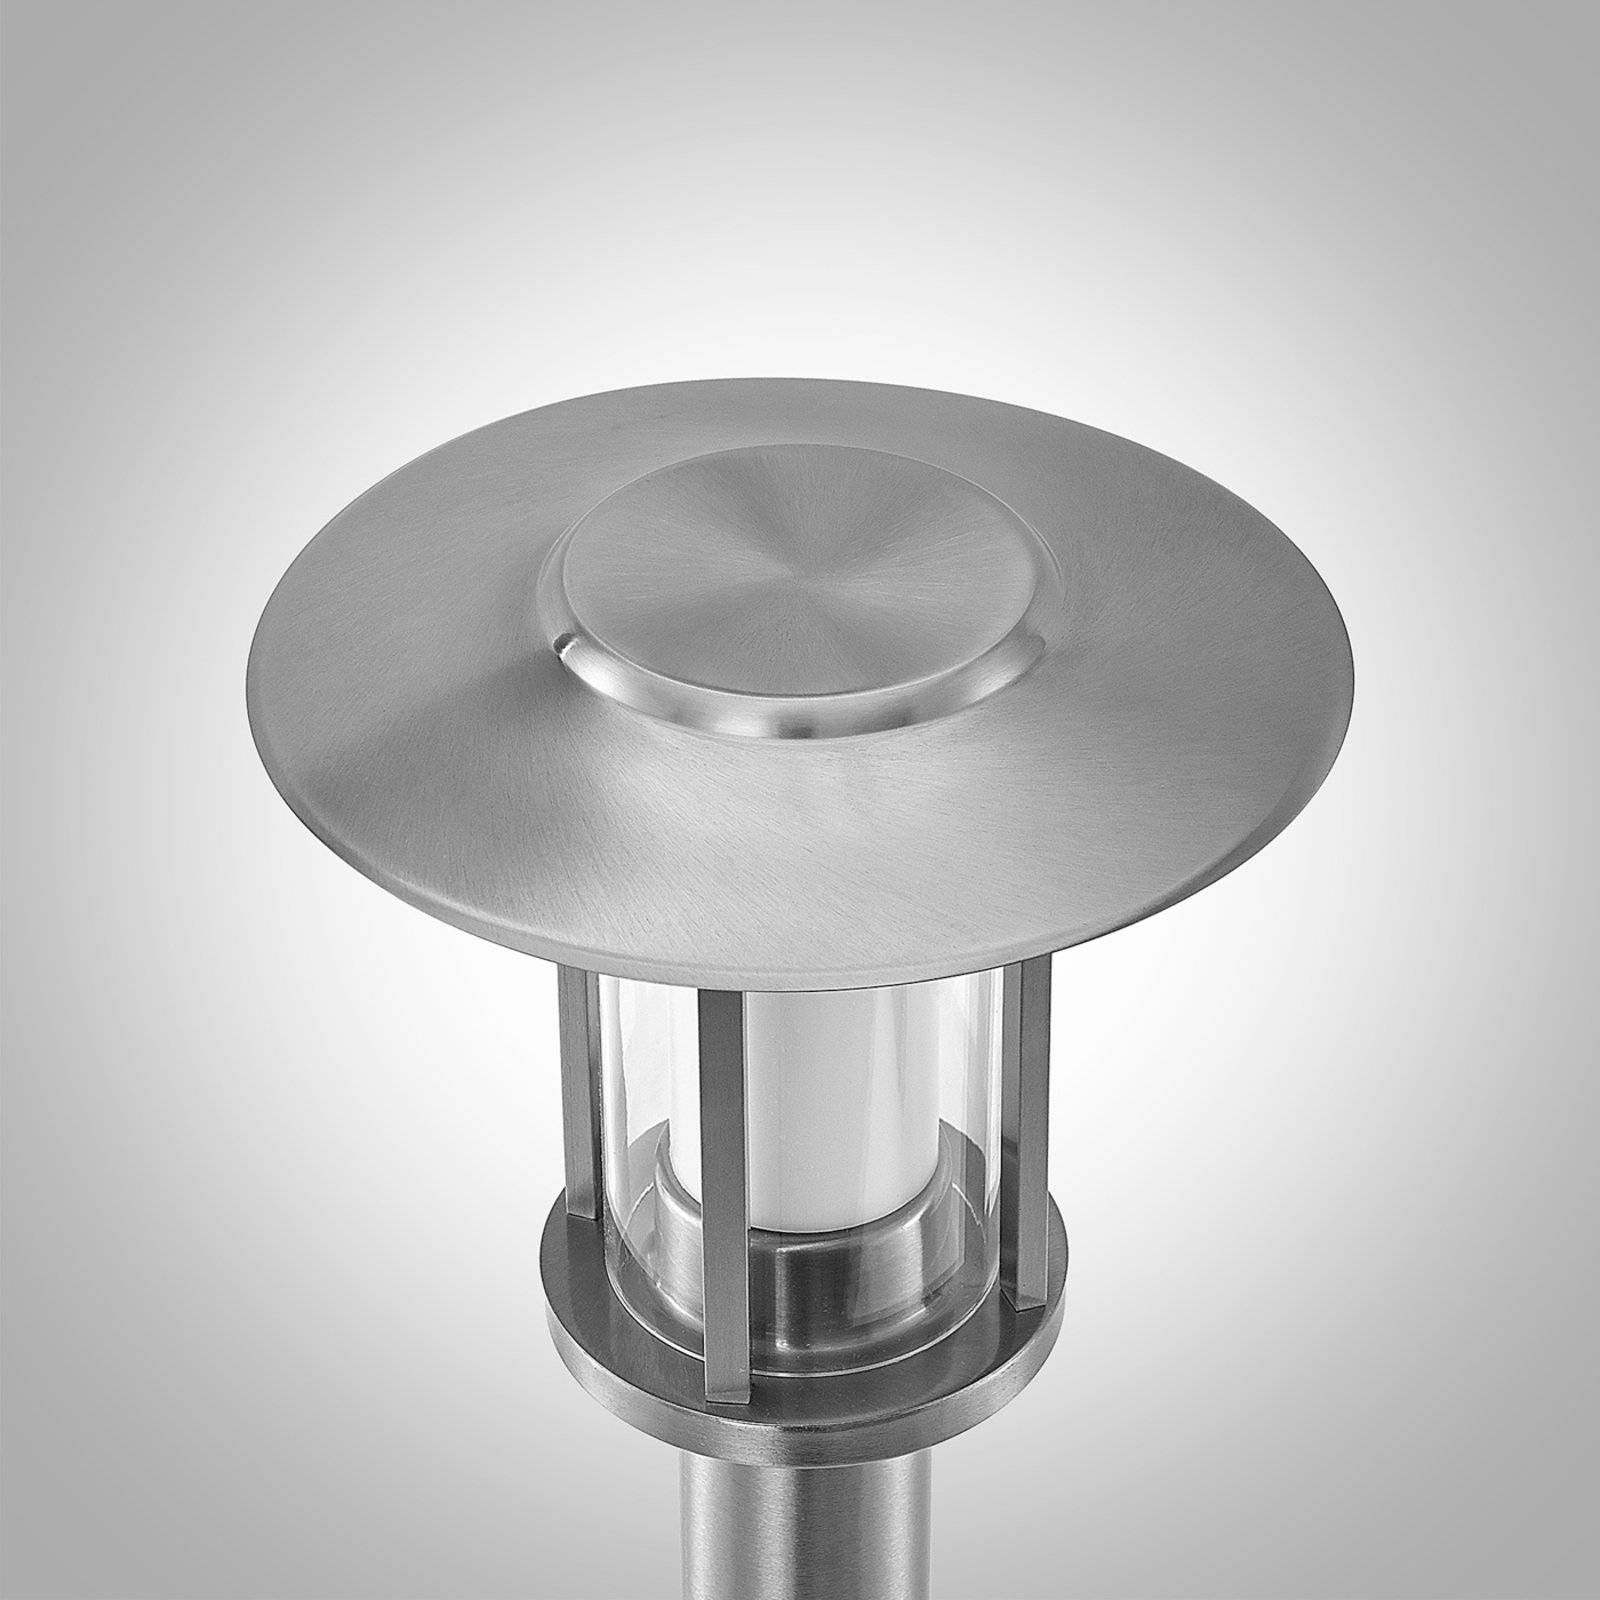 LED-Wegelampe Gregory, Edelstahl, mit Sensor